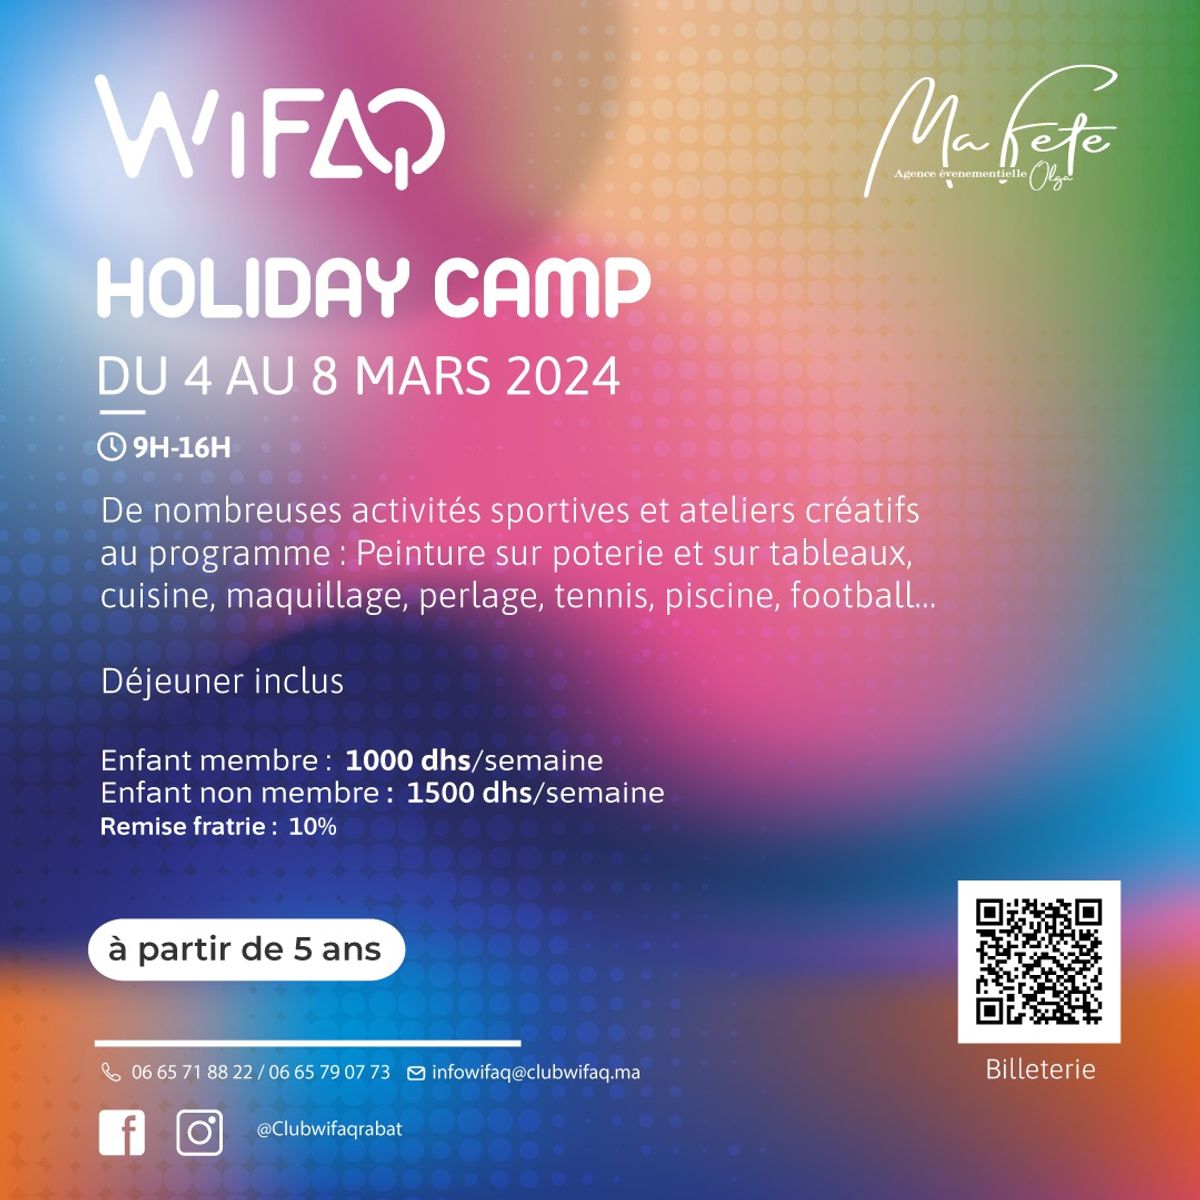 Wifaq Holiday Camp